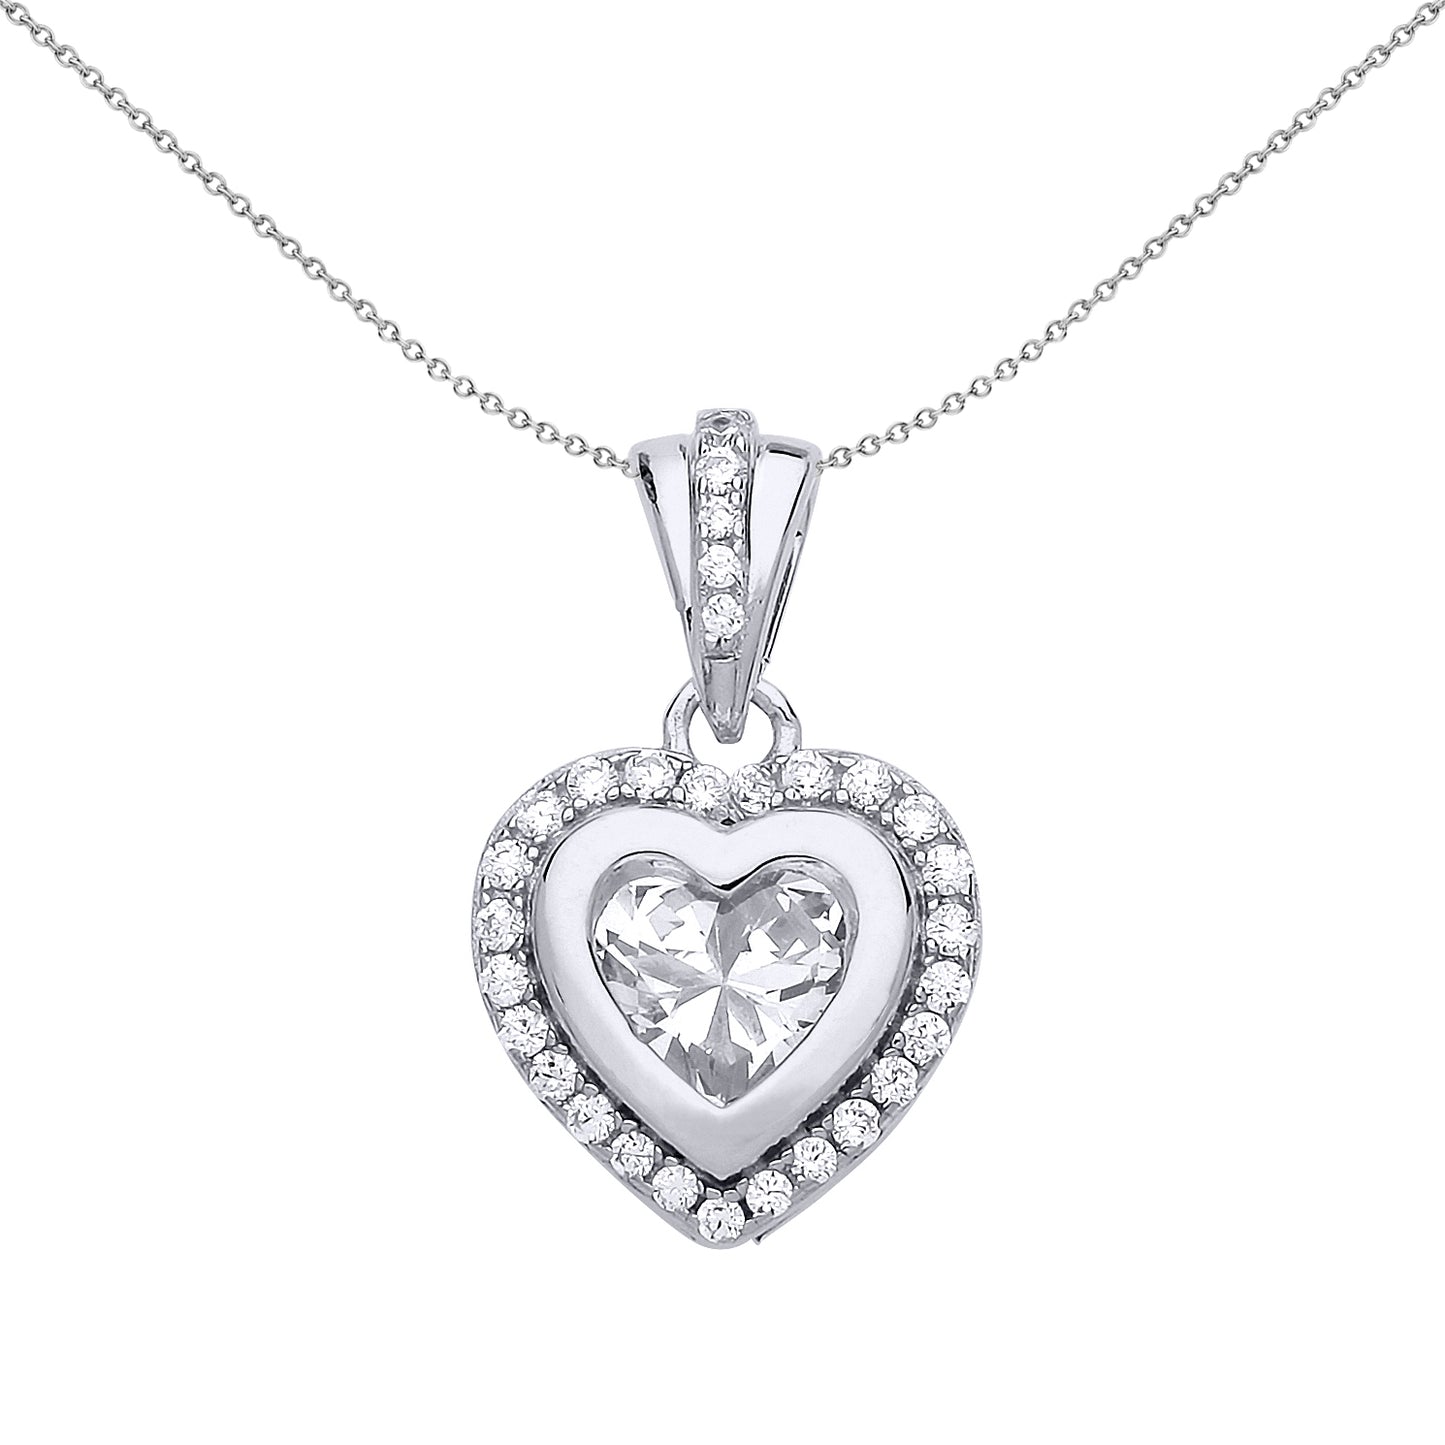 Silver  CZ Halo Love Heart Charm Necklace 18 inch - GVP473